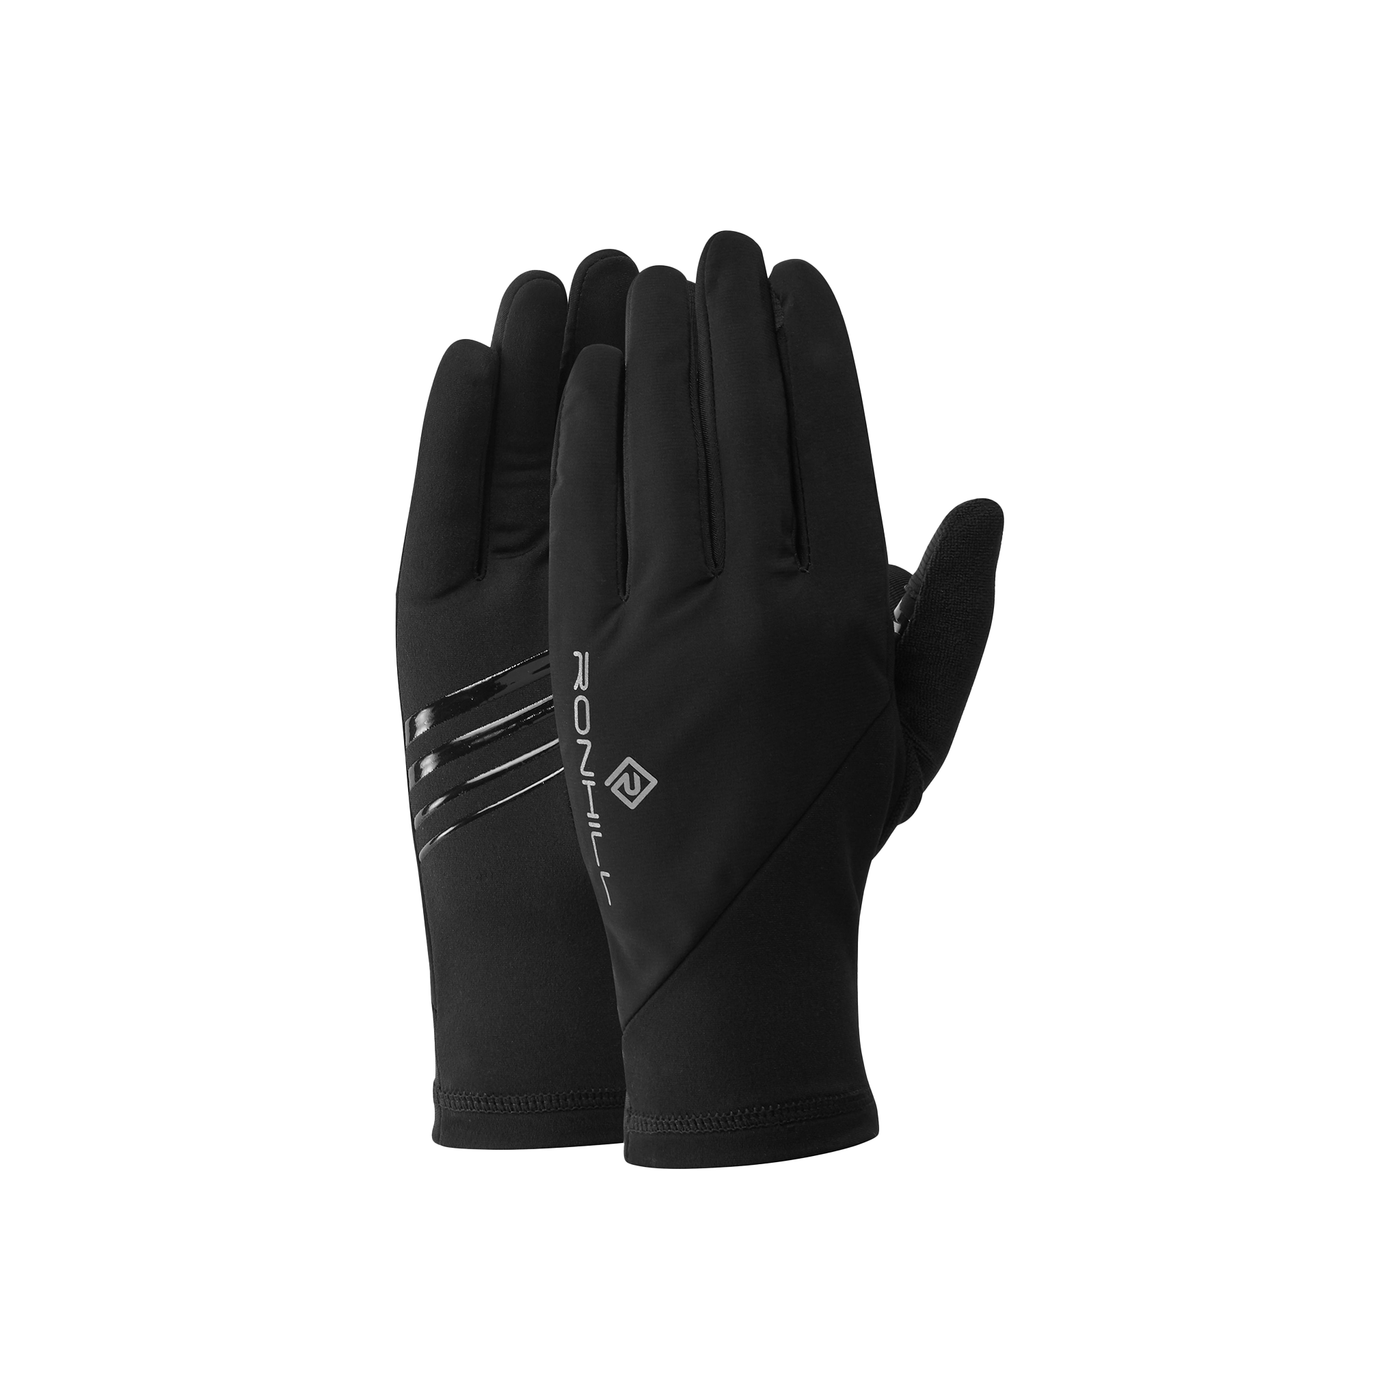 RonHill Wind-Block Glove - All Black